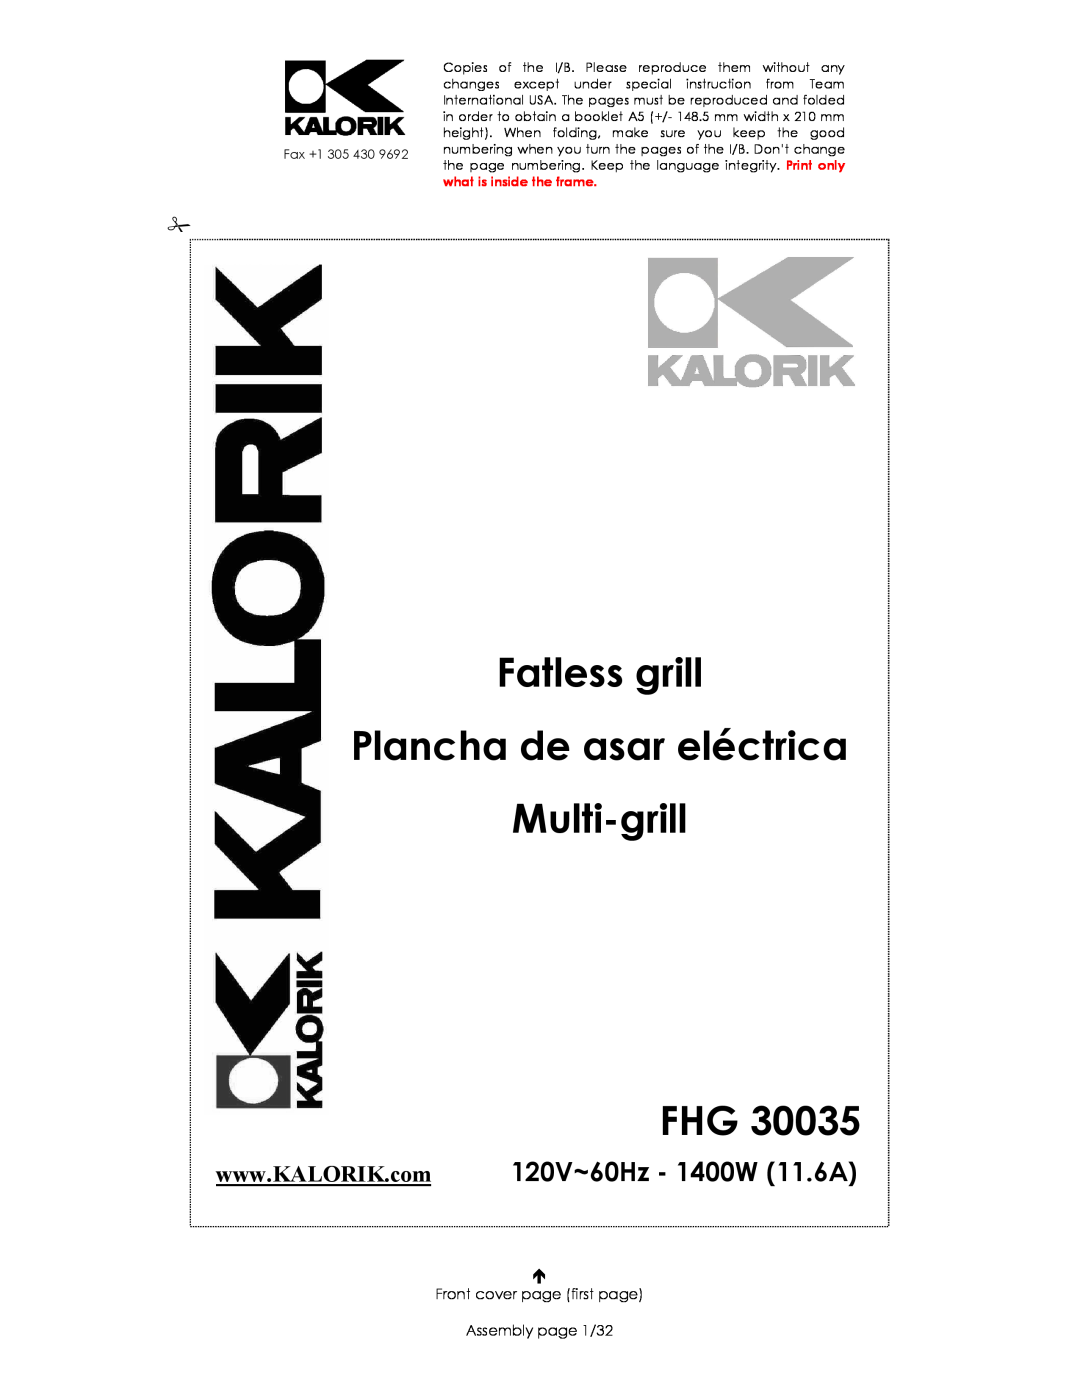 Kalorik FHG 30035 manual Fatless grill Plancha de asar eléctrica, Multi-grill FHG 